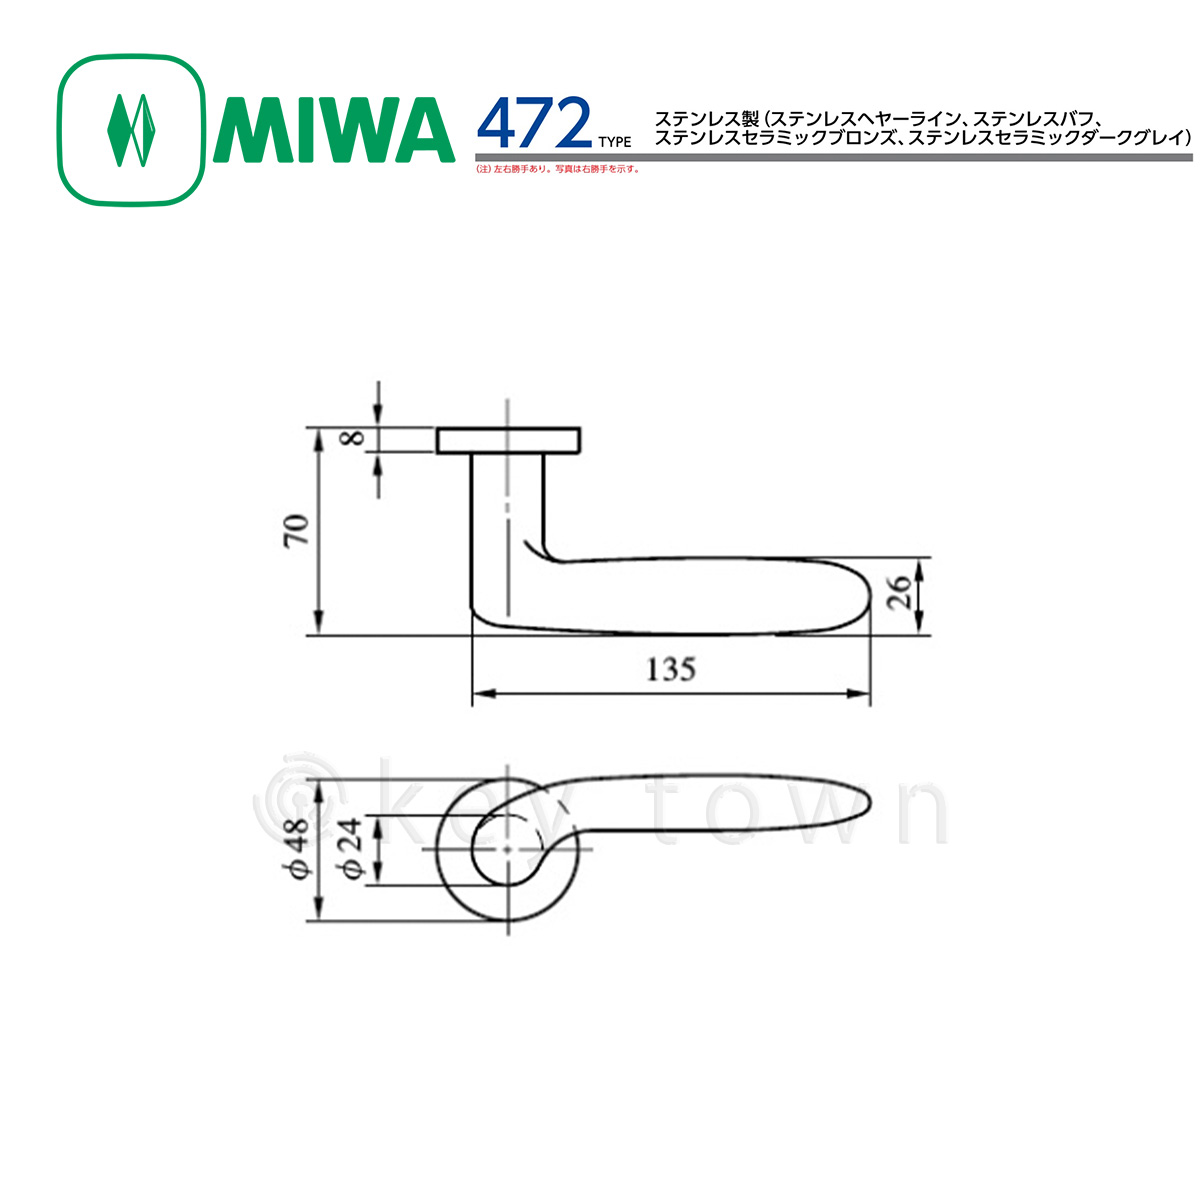 MIWA 【美和ロック】 ハンドル [MIWA-LA-472] 交換用ステンレス製 